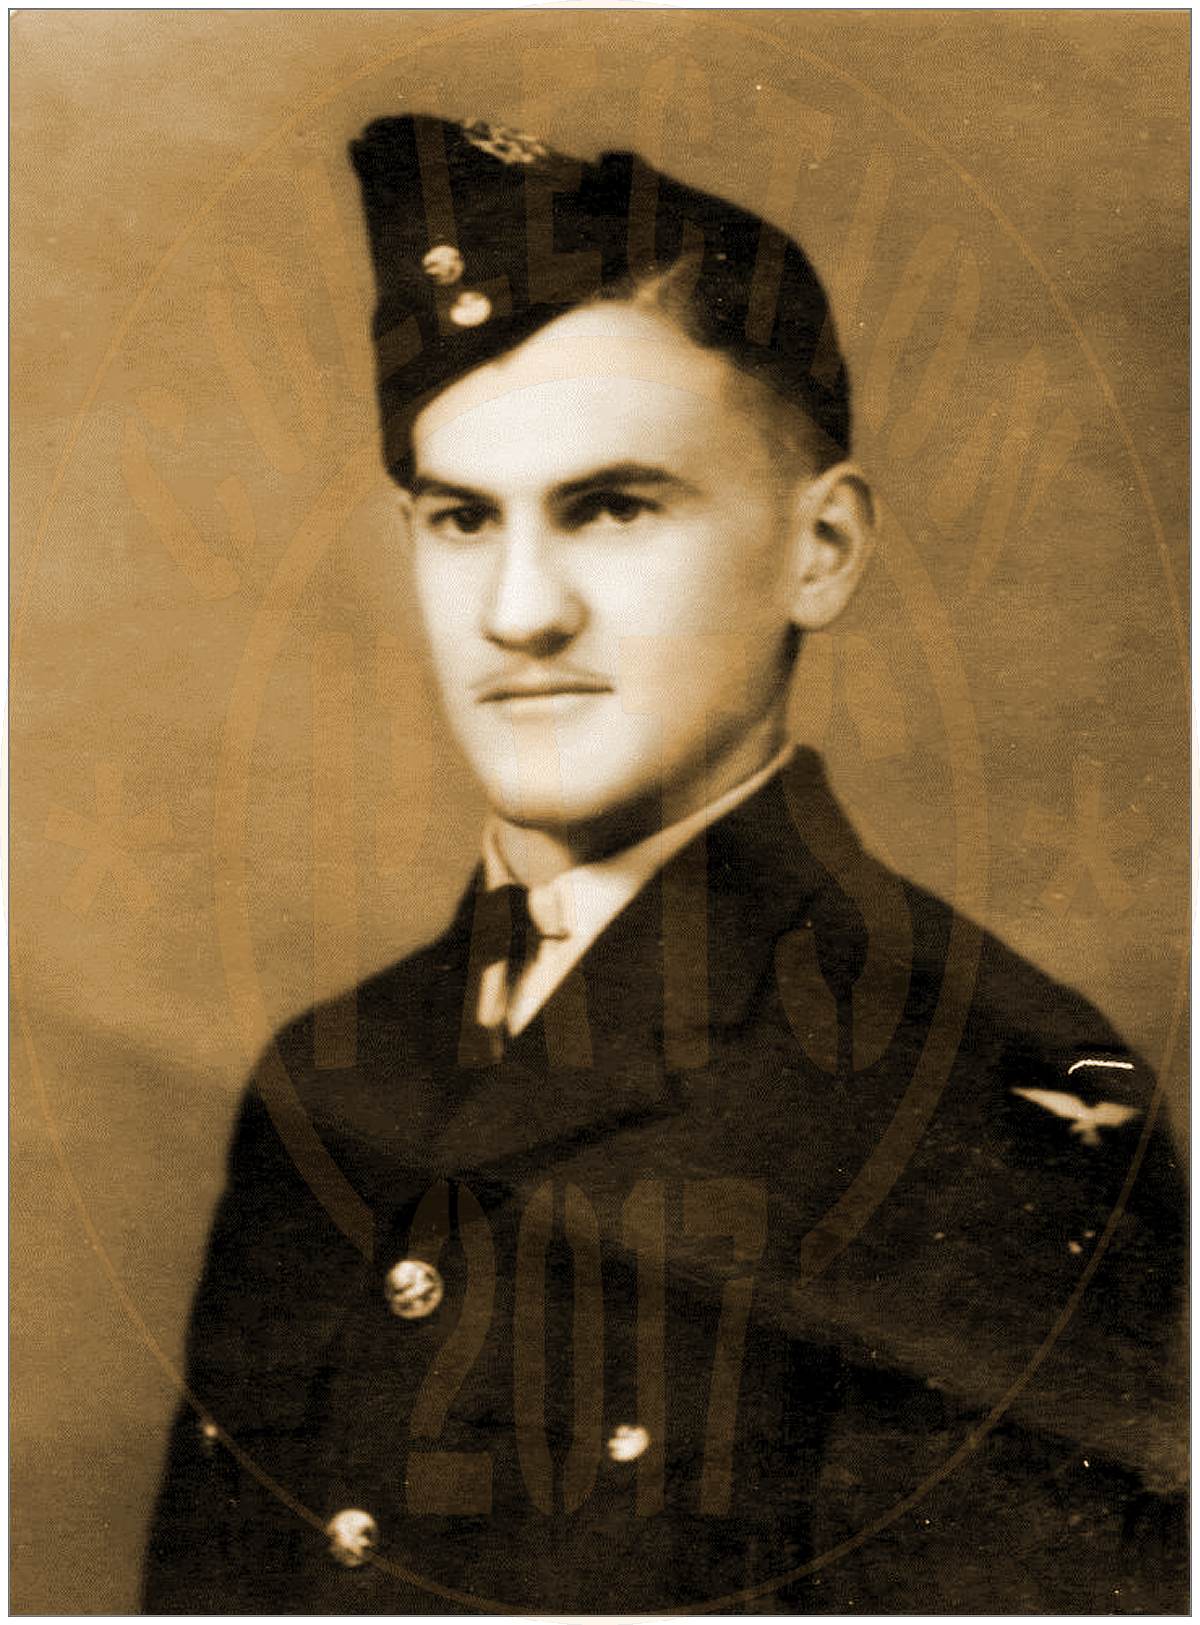 F/Sgt. Stanley Finace Mattoon - RCAF - portrait